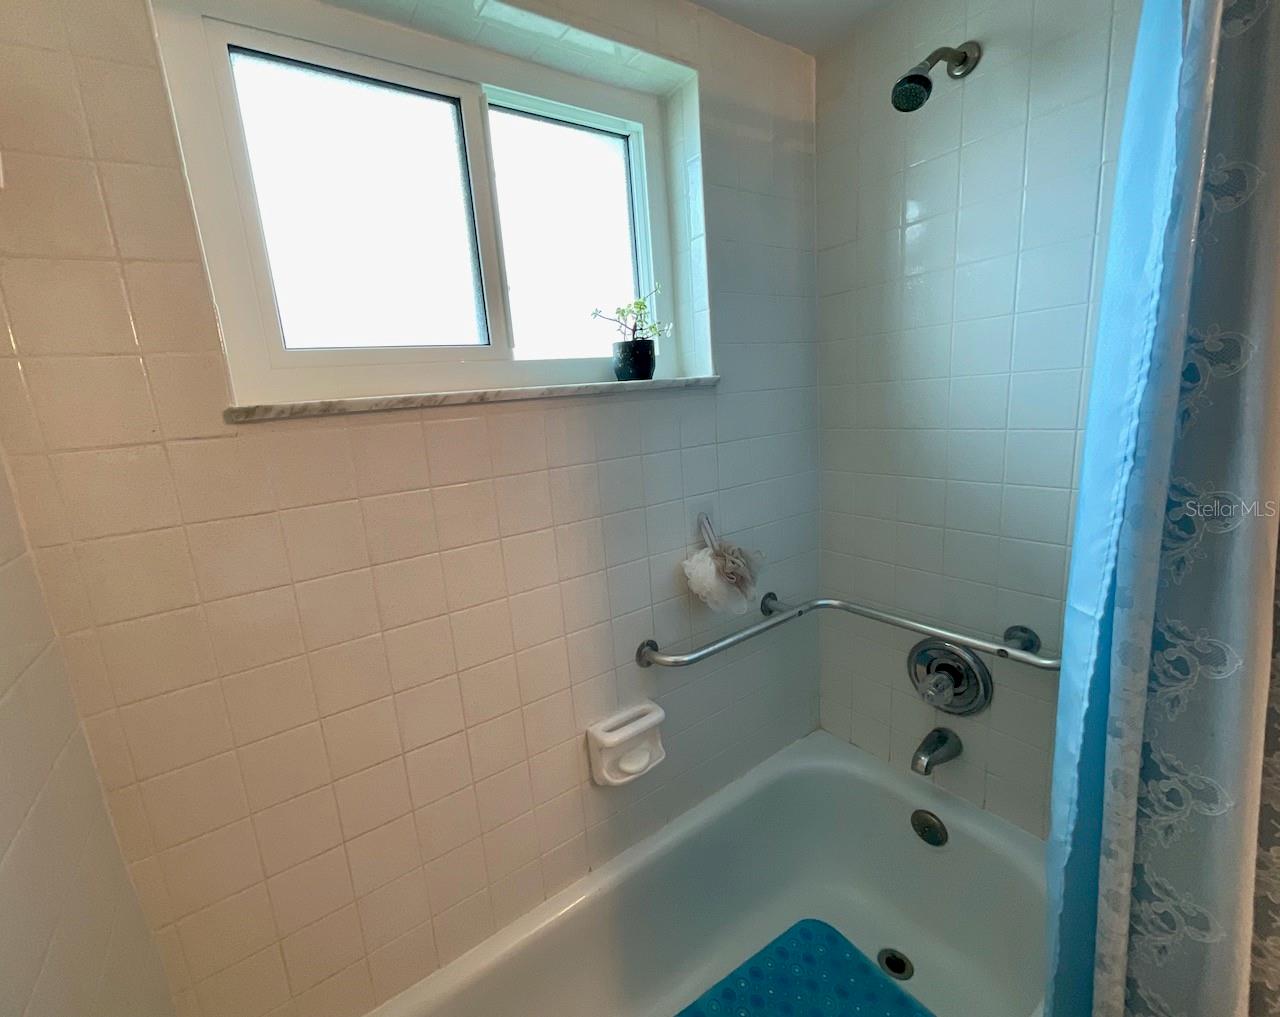 Guest Bath tub and shower